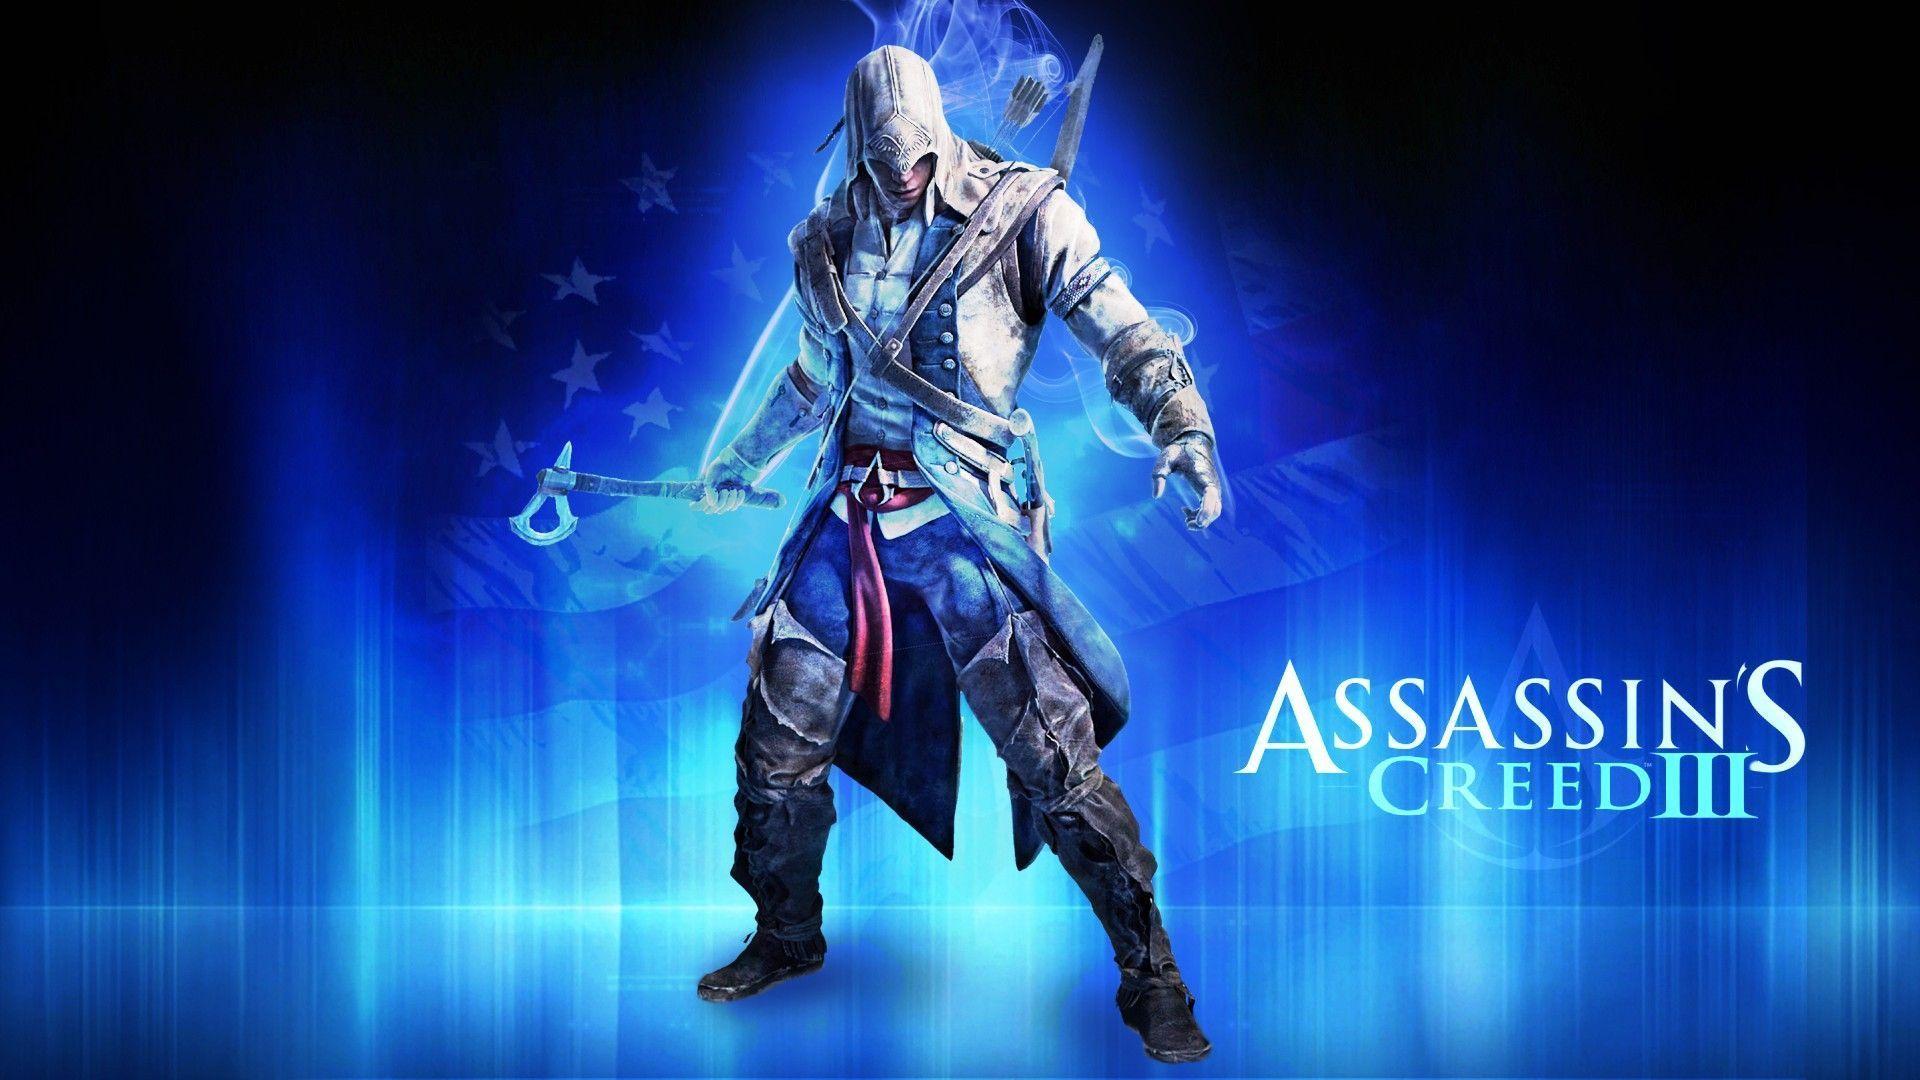 Assassin&;s Creed III Wallpaper, Assassin&;s Creed III HD Wallpaper